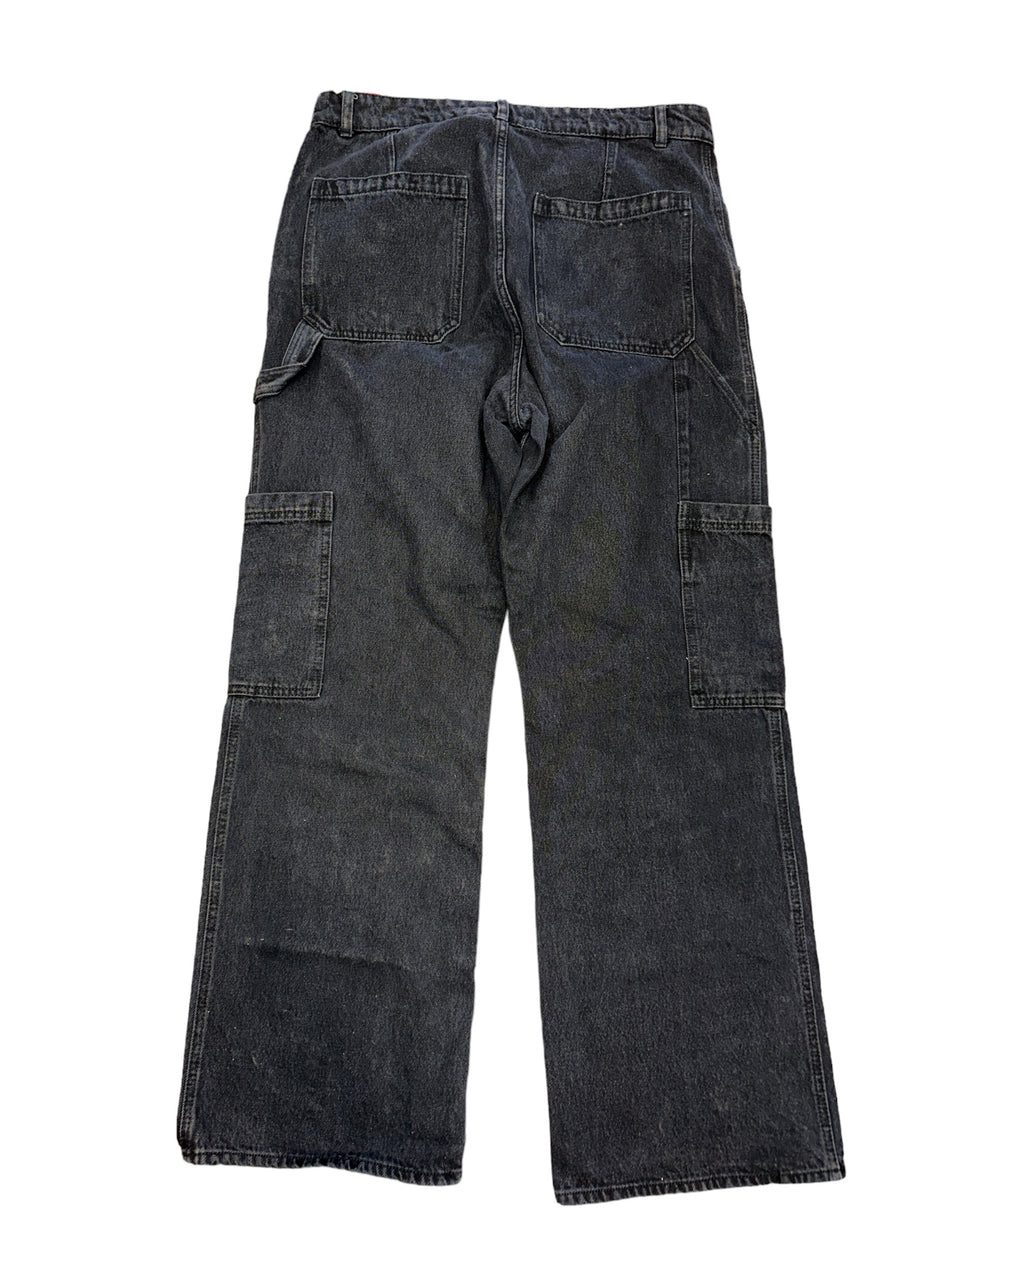 Black H&M Cargo Jeans, 14